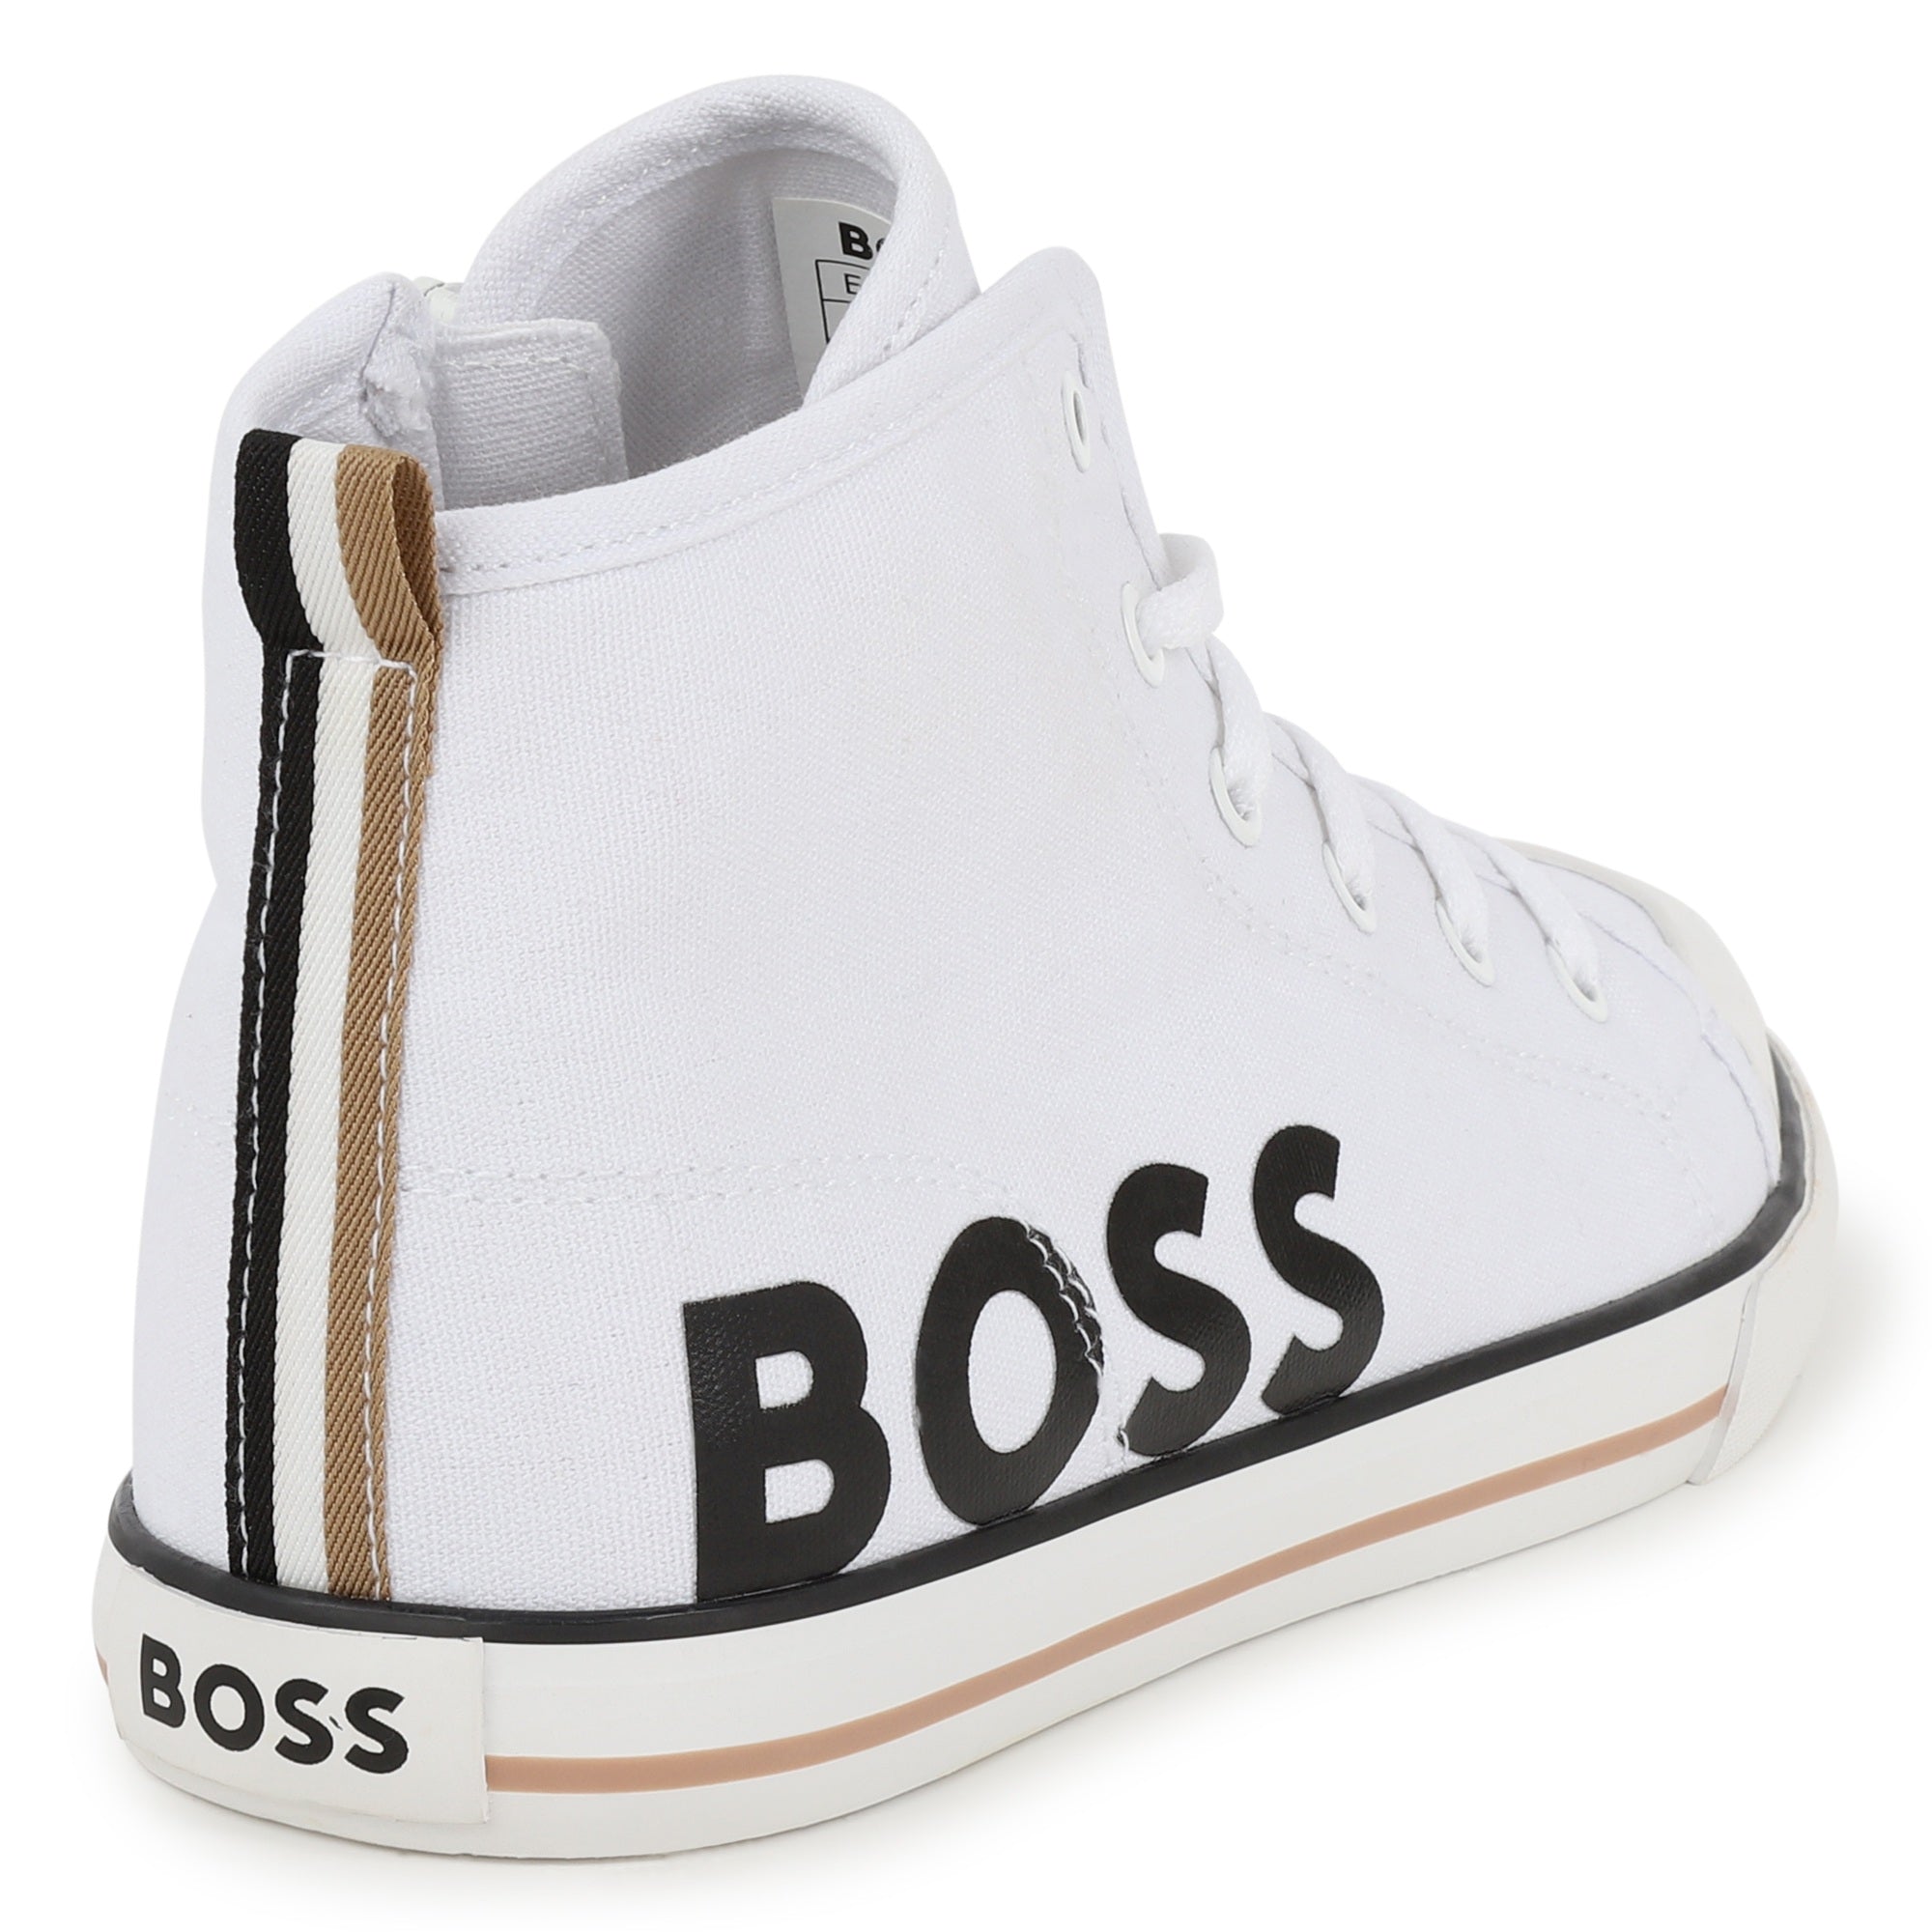 Hugo Boss White High-Top Sneakers